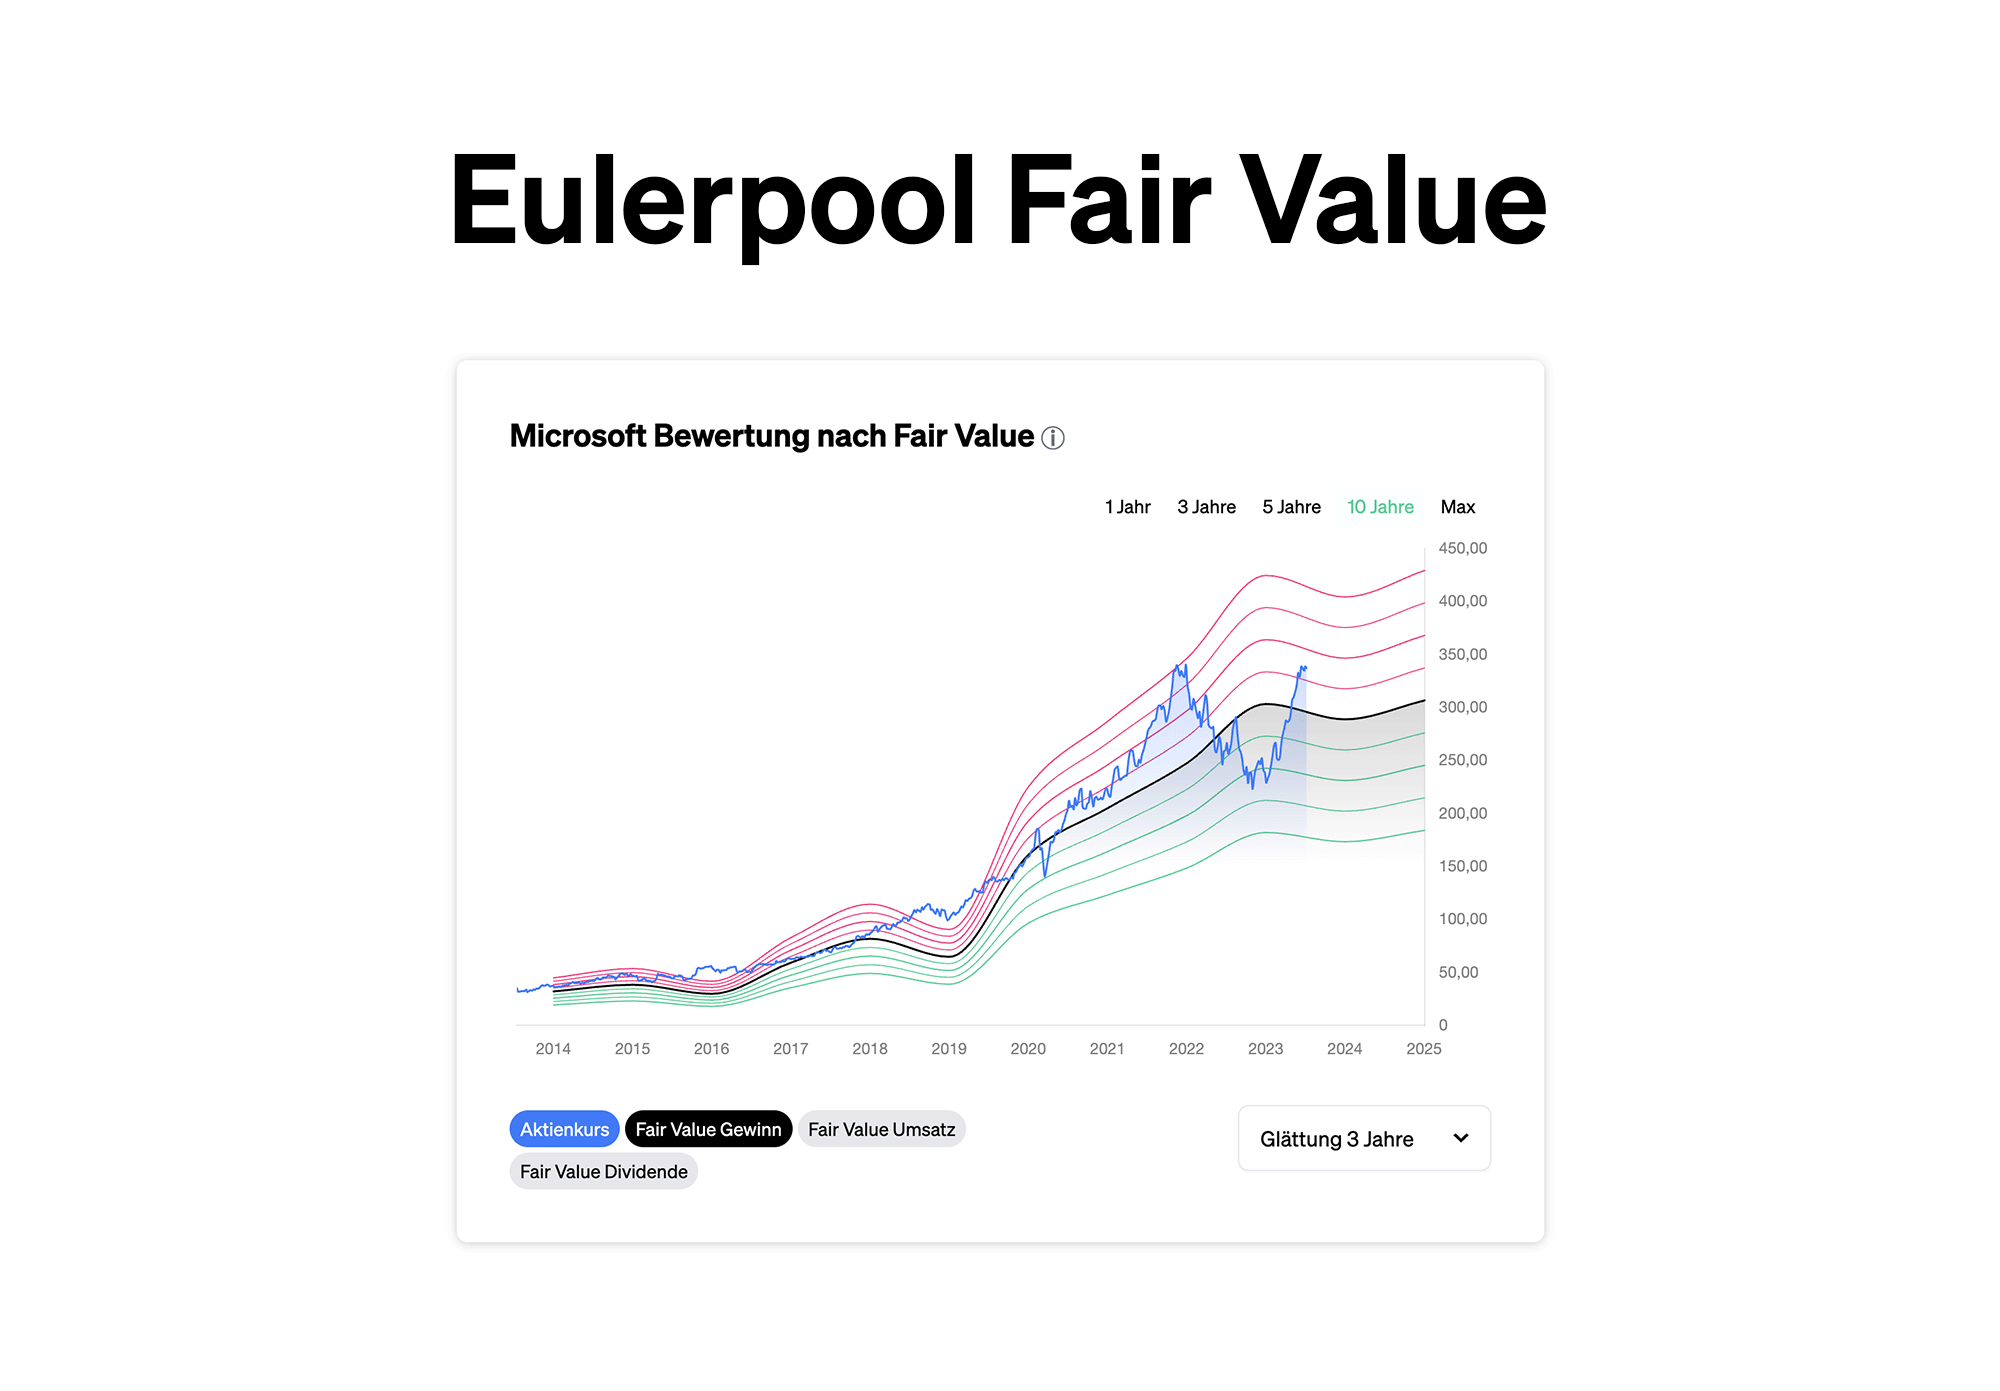 (c) Eulerpool-fairvalue.de